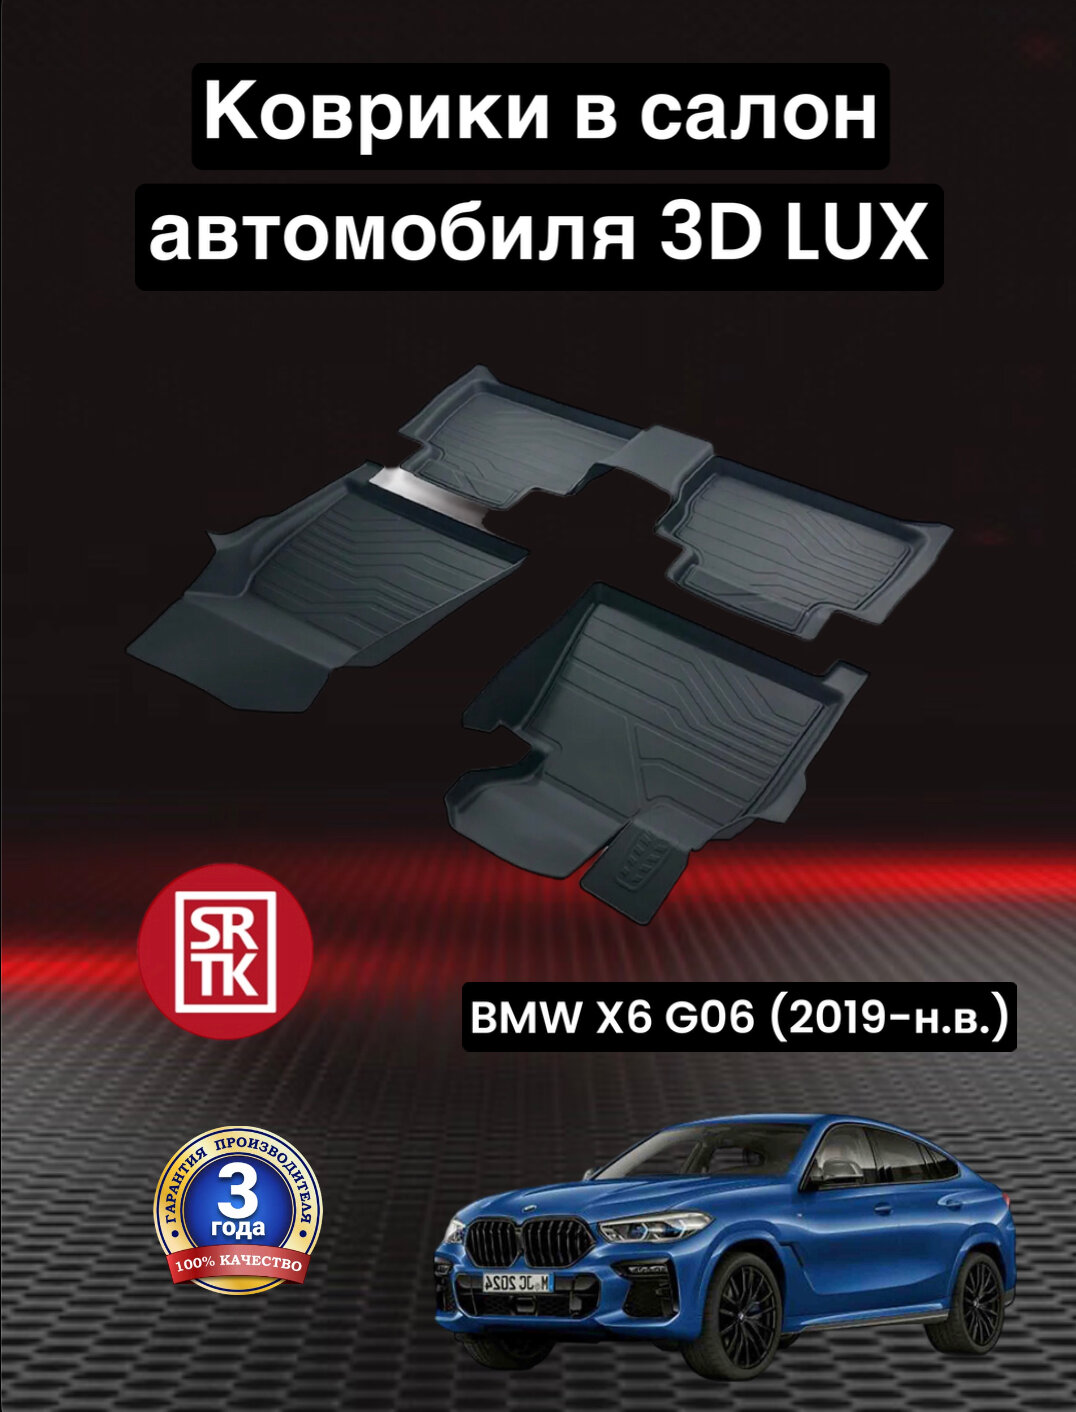 Коврики резиновые БМВ Х6 Г06 (2019-)/БМВ Х6 G06 (2019-) 3D LUX SRTK (Саранск) комплект в салон